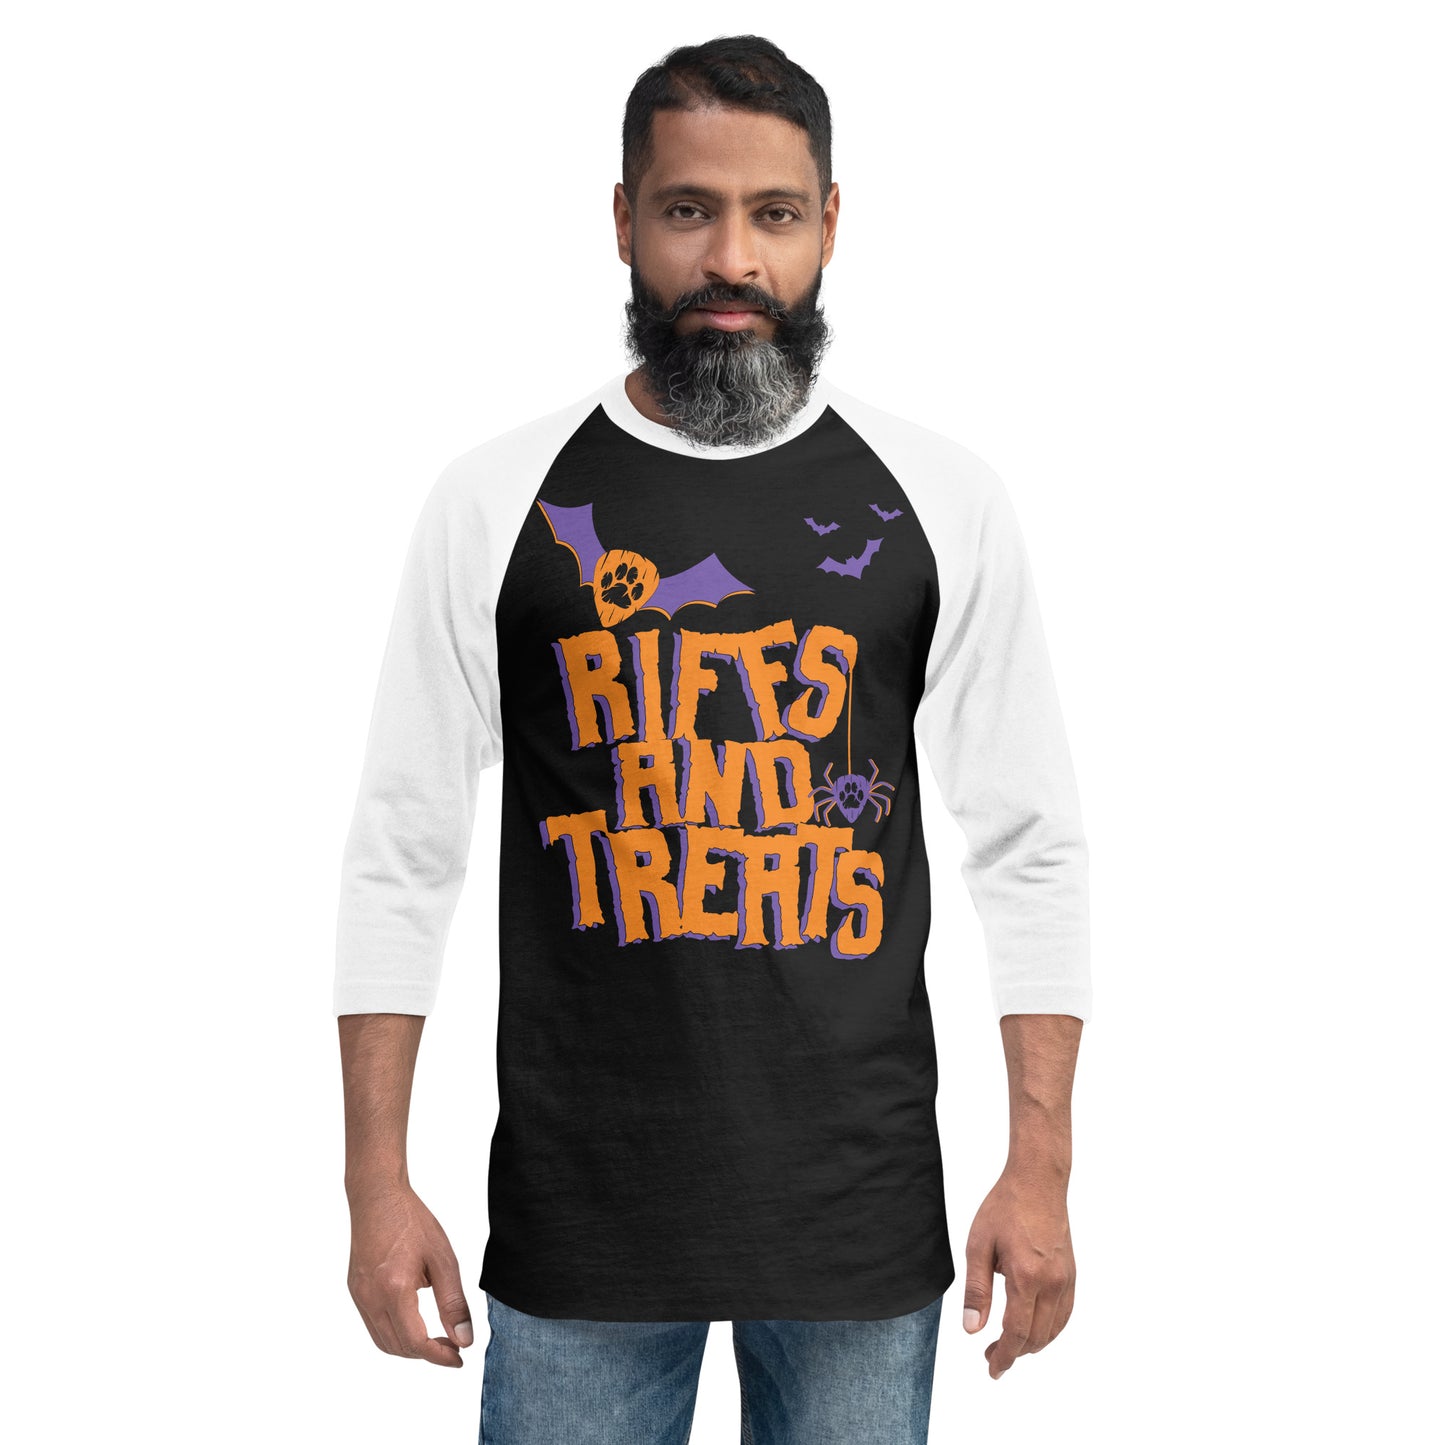 Riffs and Treats 3/4 sleeve raglan shirt